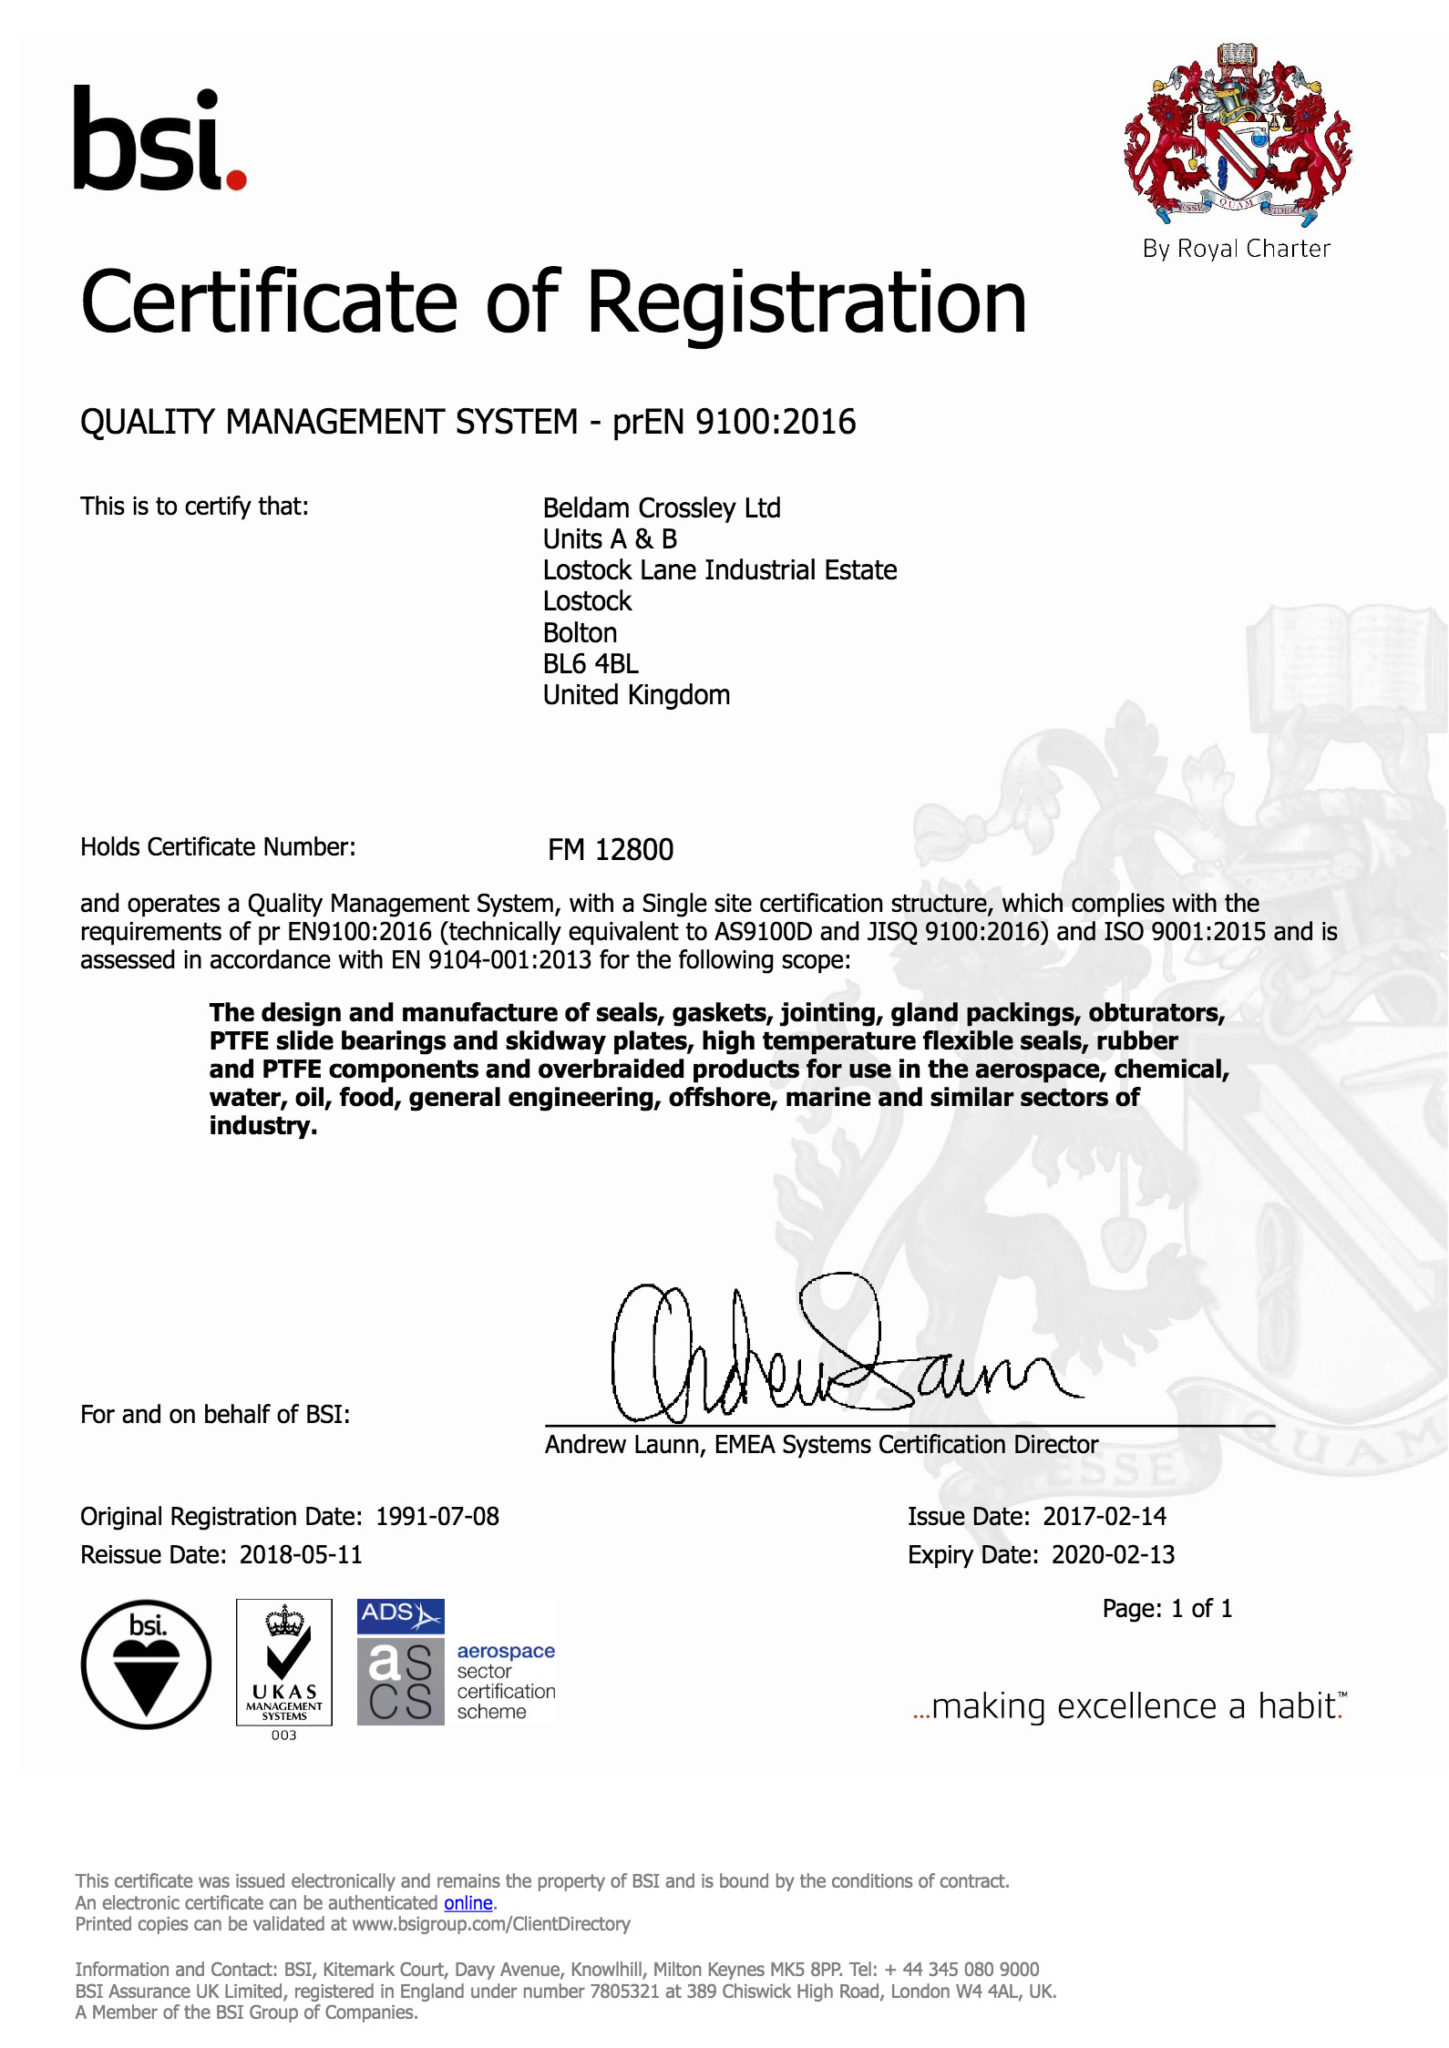 BSI certificate of registration